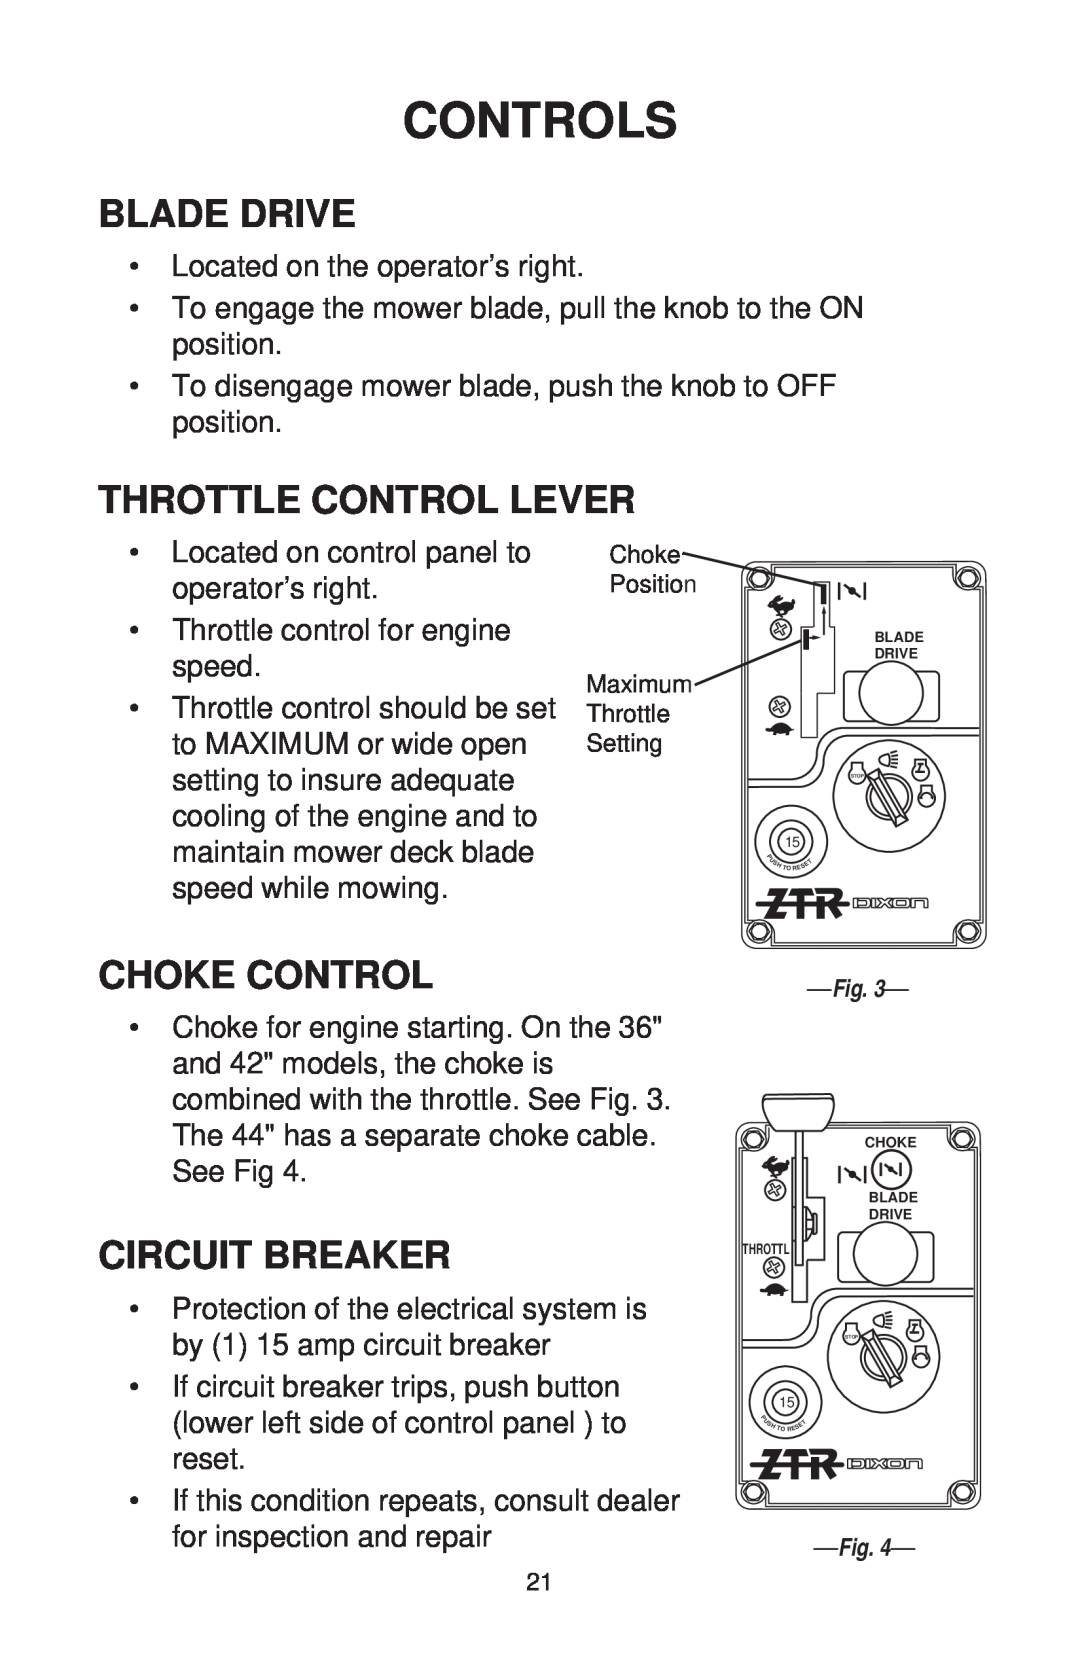 Dixon ZTR 44/968999538 manual Blade Drive, Throttle Control Lever, Choke Control, Circuit Breaker, Controls 